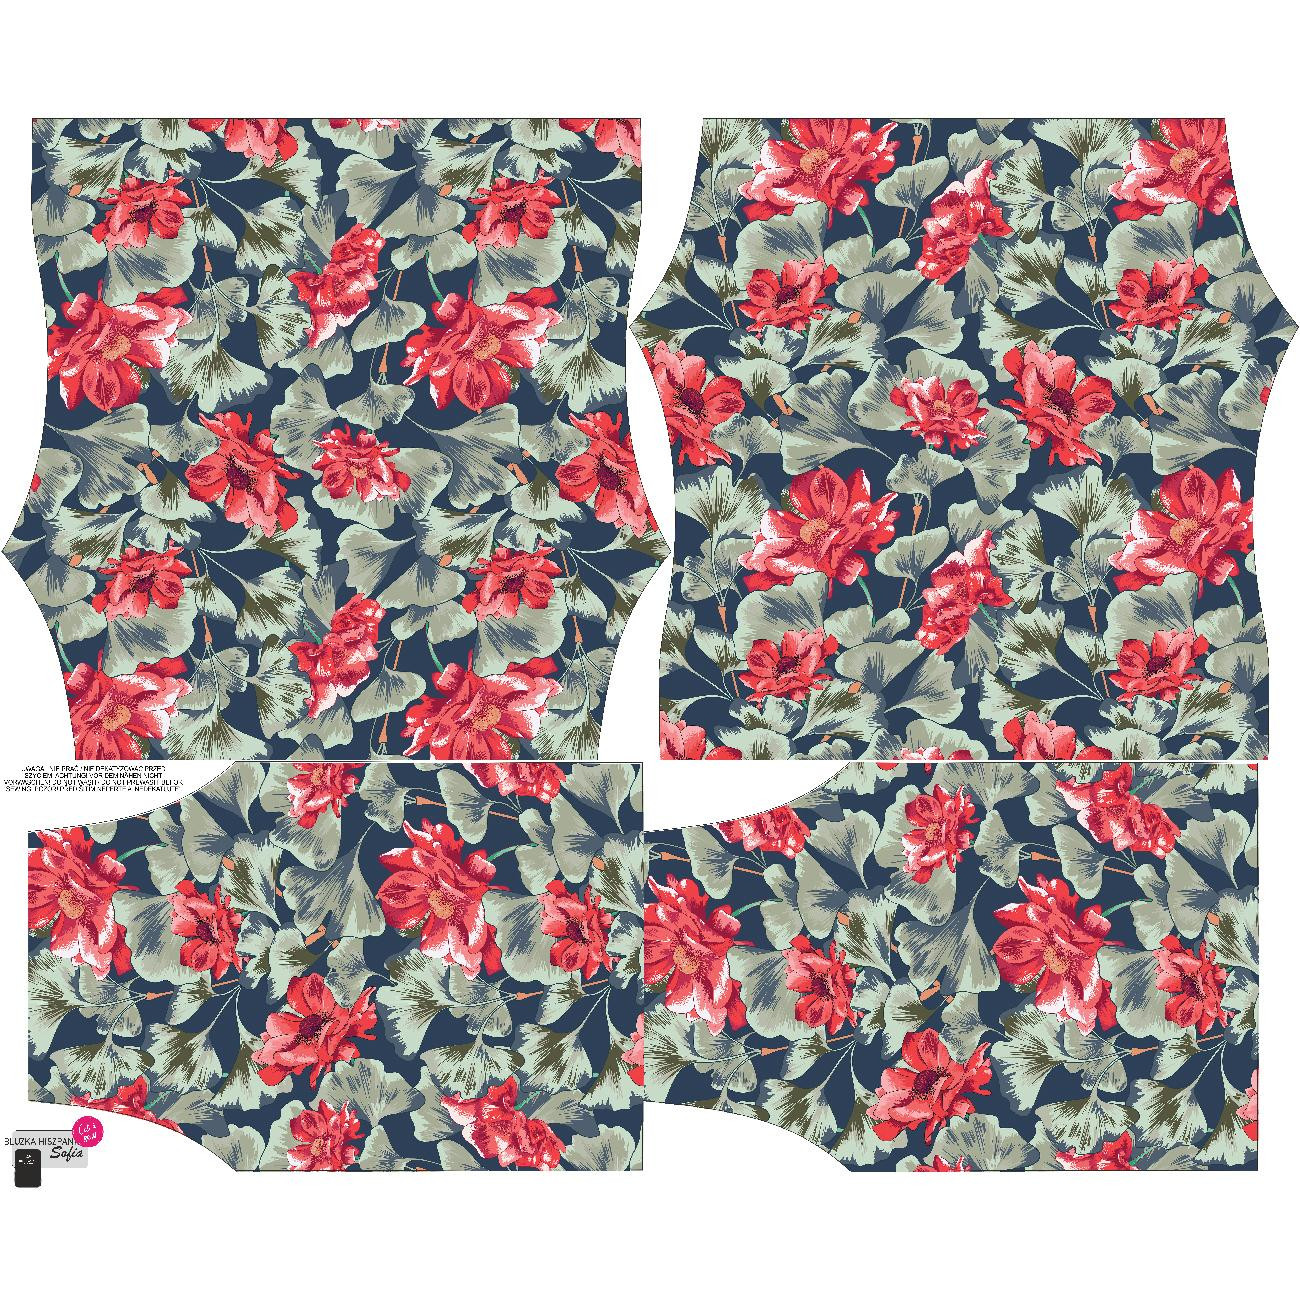 Bardot neckline blouse SOFIA - RED POPPIES (RED GARDEN) - sewing set